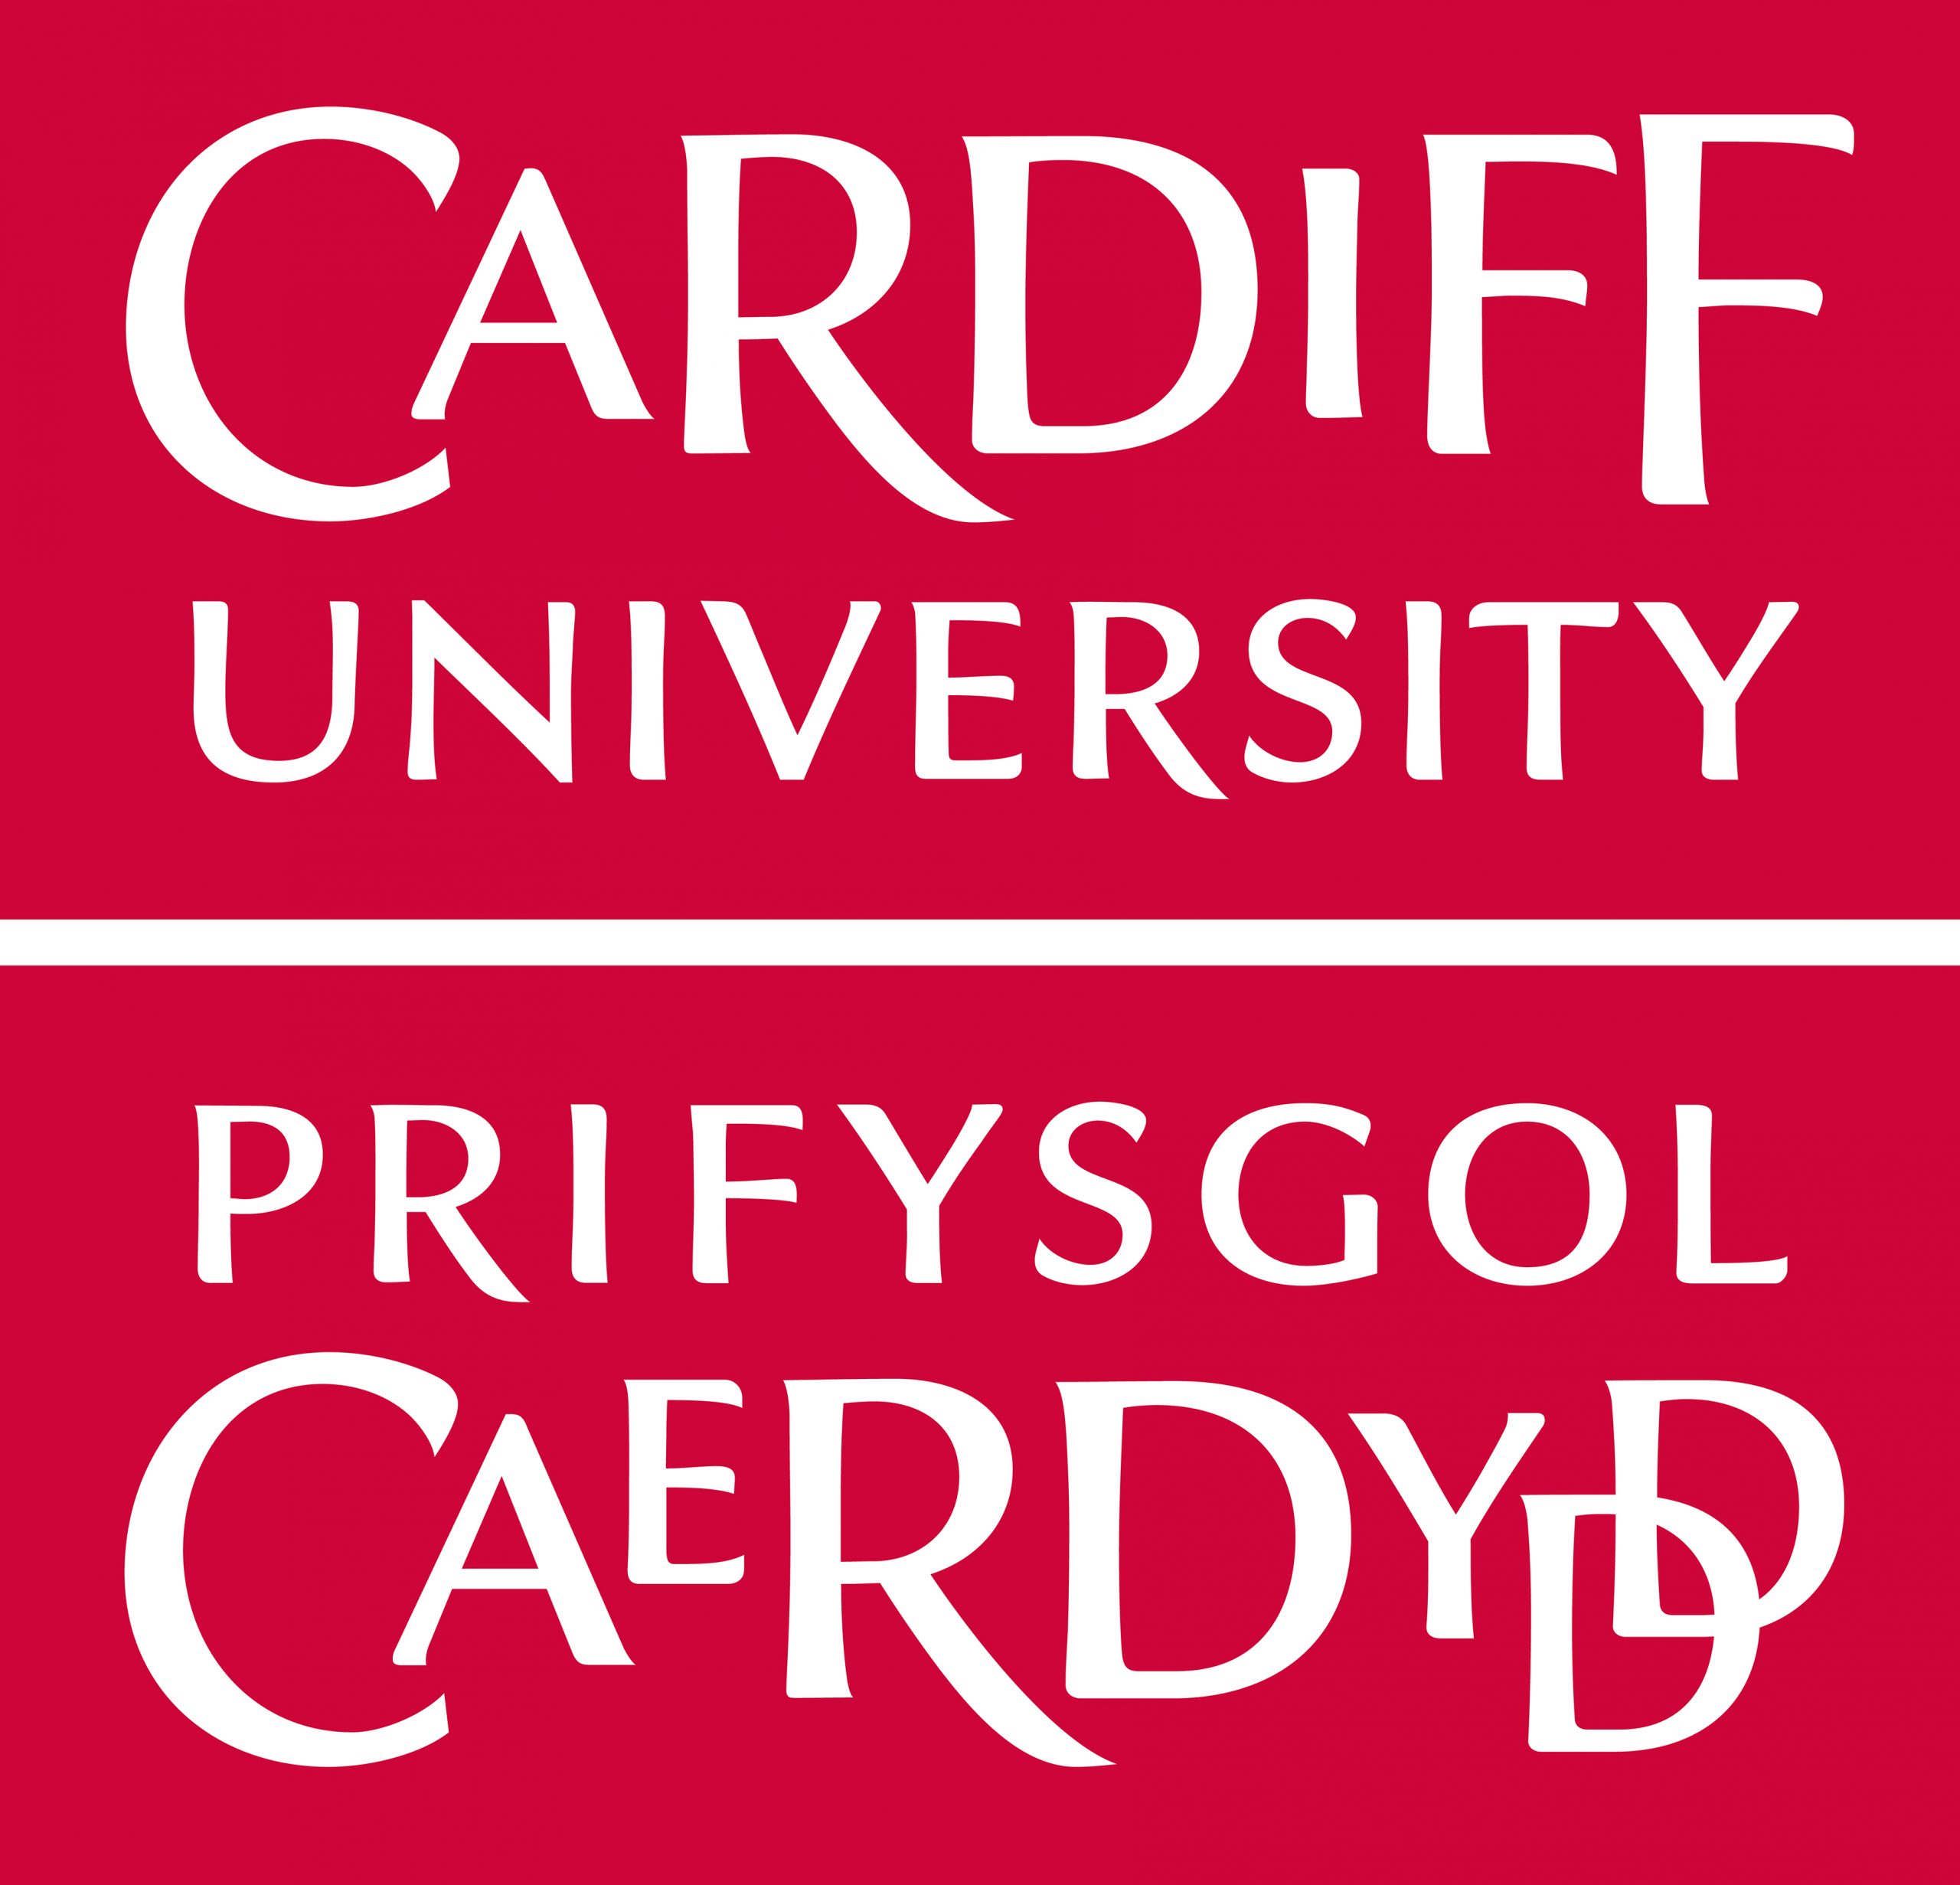 Study at Cardiff University